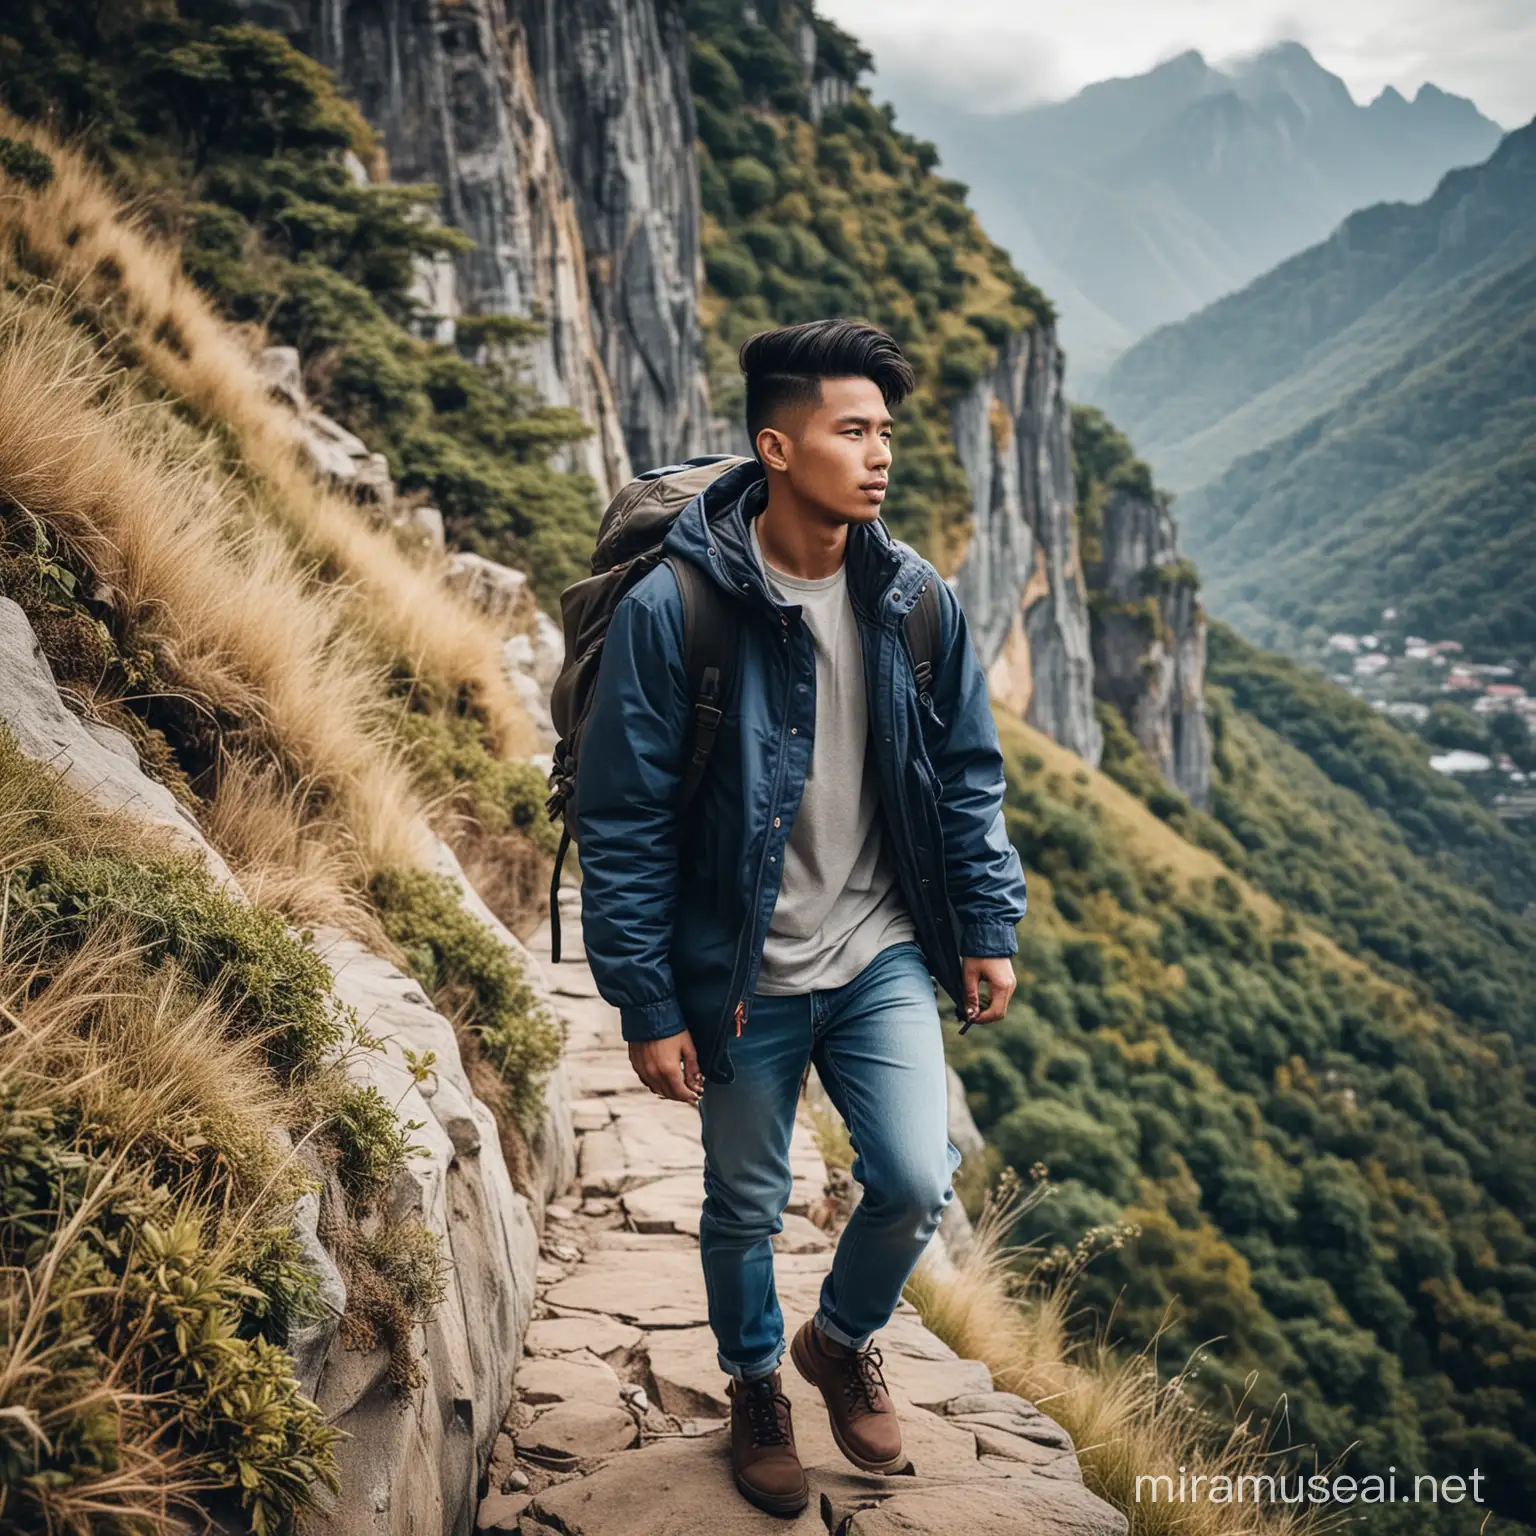 Fotografi pria indonesia umur 25 tahun,rambut undercut bun hair, baju kaos dan jaket parka, celana jean biru,sepatu kulit,membawa tas ransel yang besar, memanjat tebing yang curam, lokasi sebuah gunung yang indah 